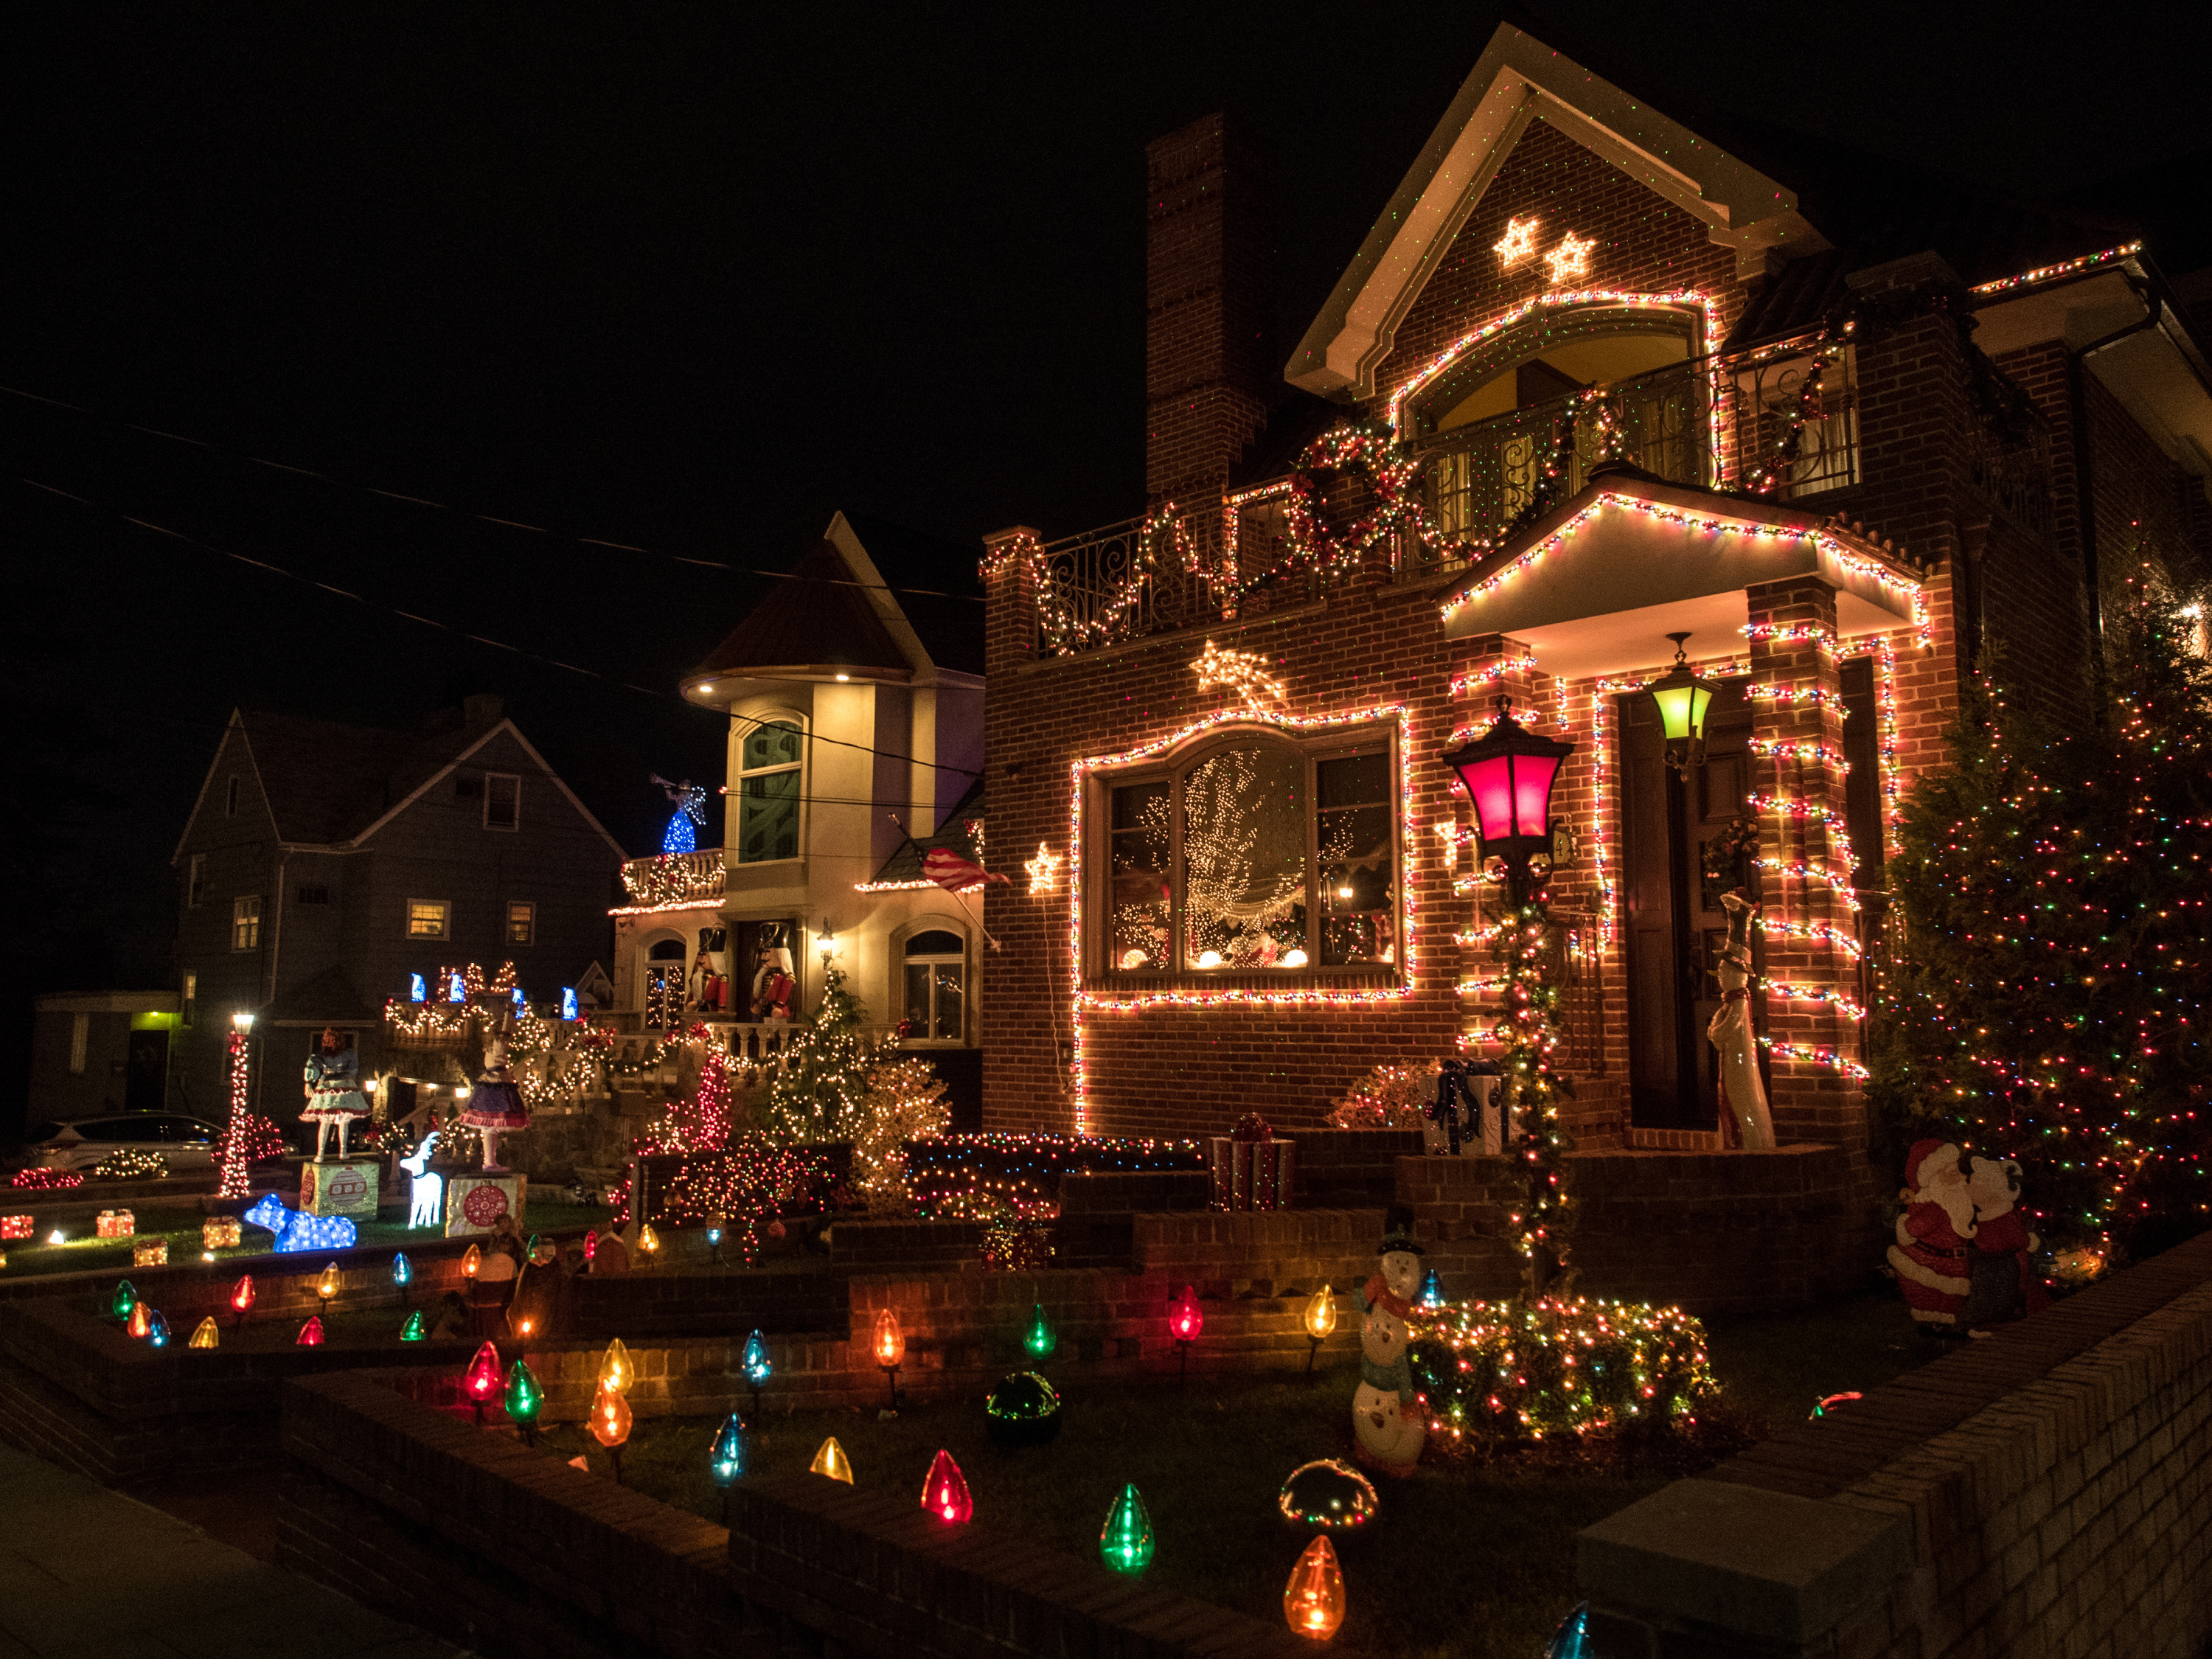 Illuminations et décorations de Noël : que dit la loi ?